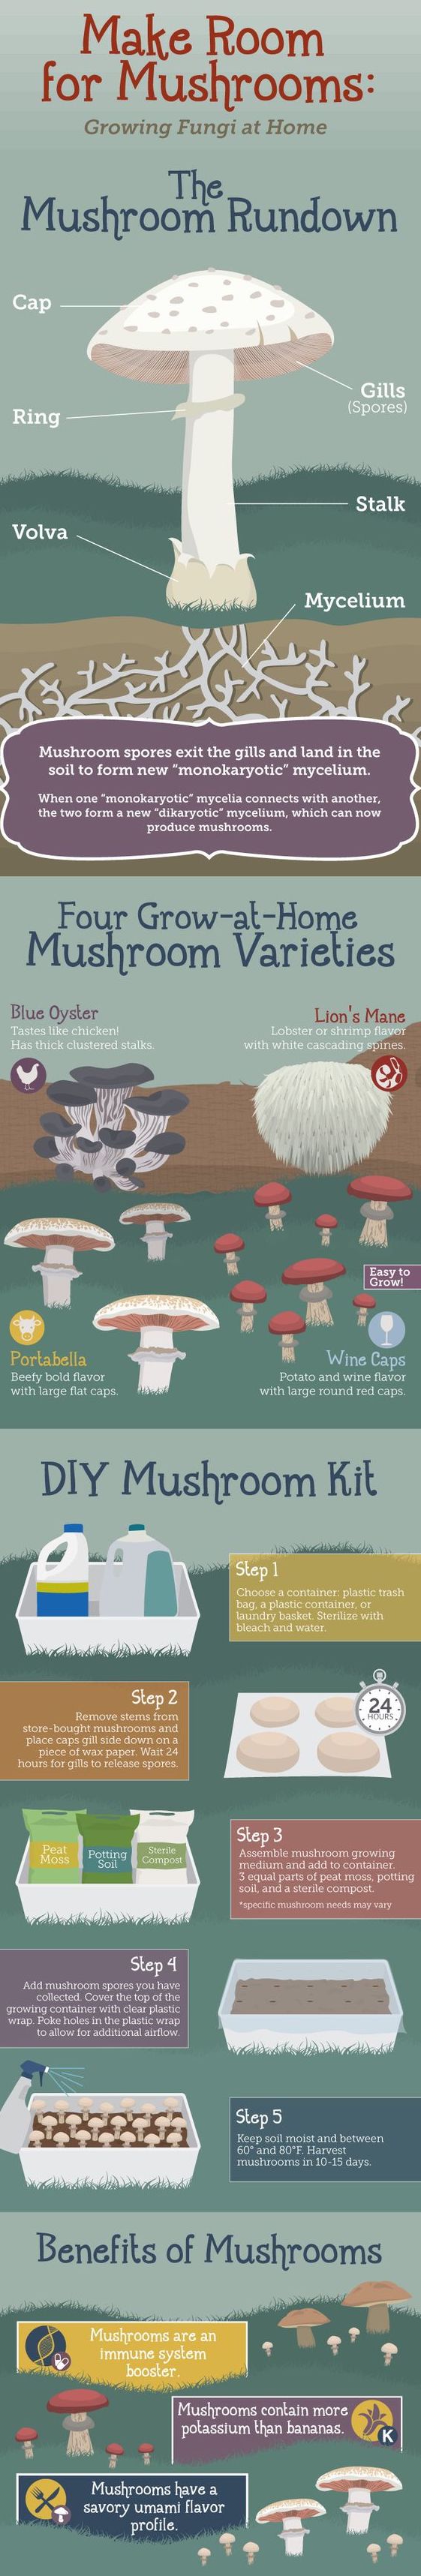 Grow mushrooms course online